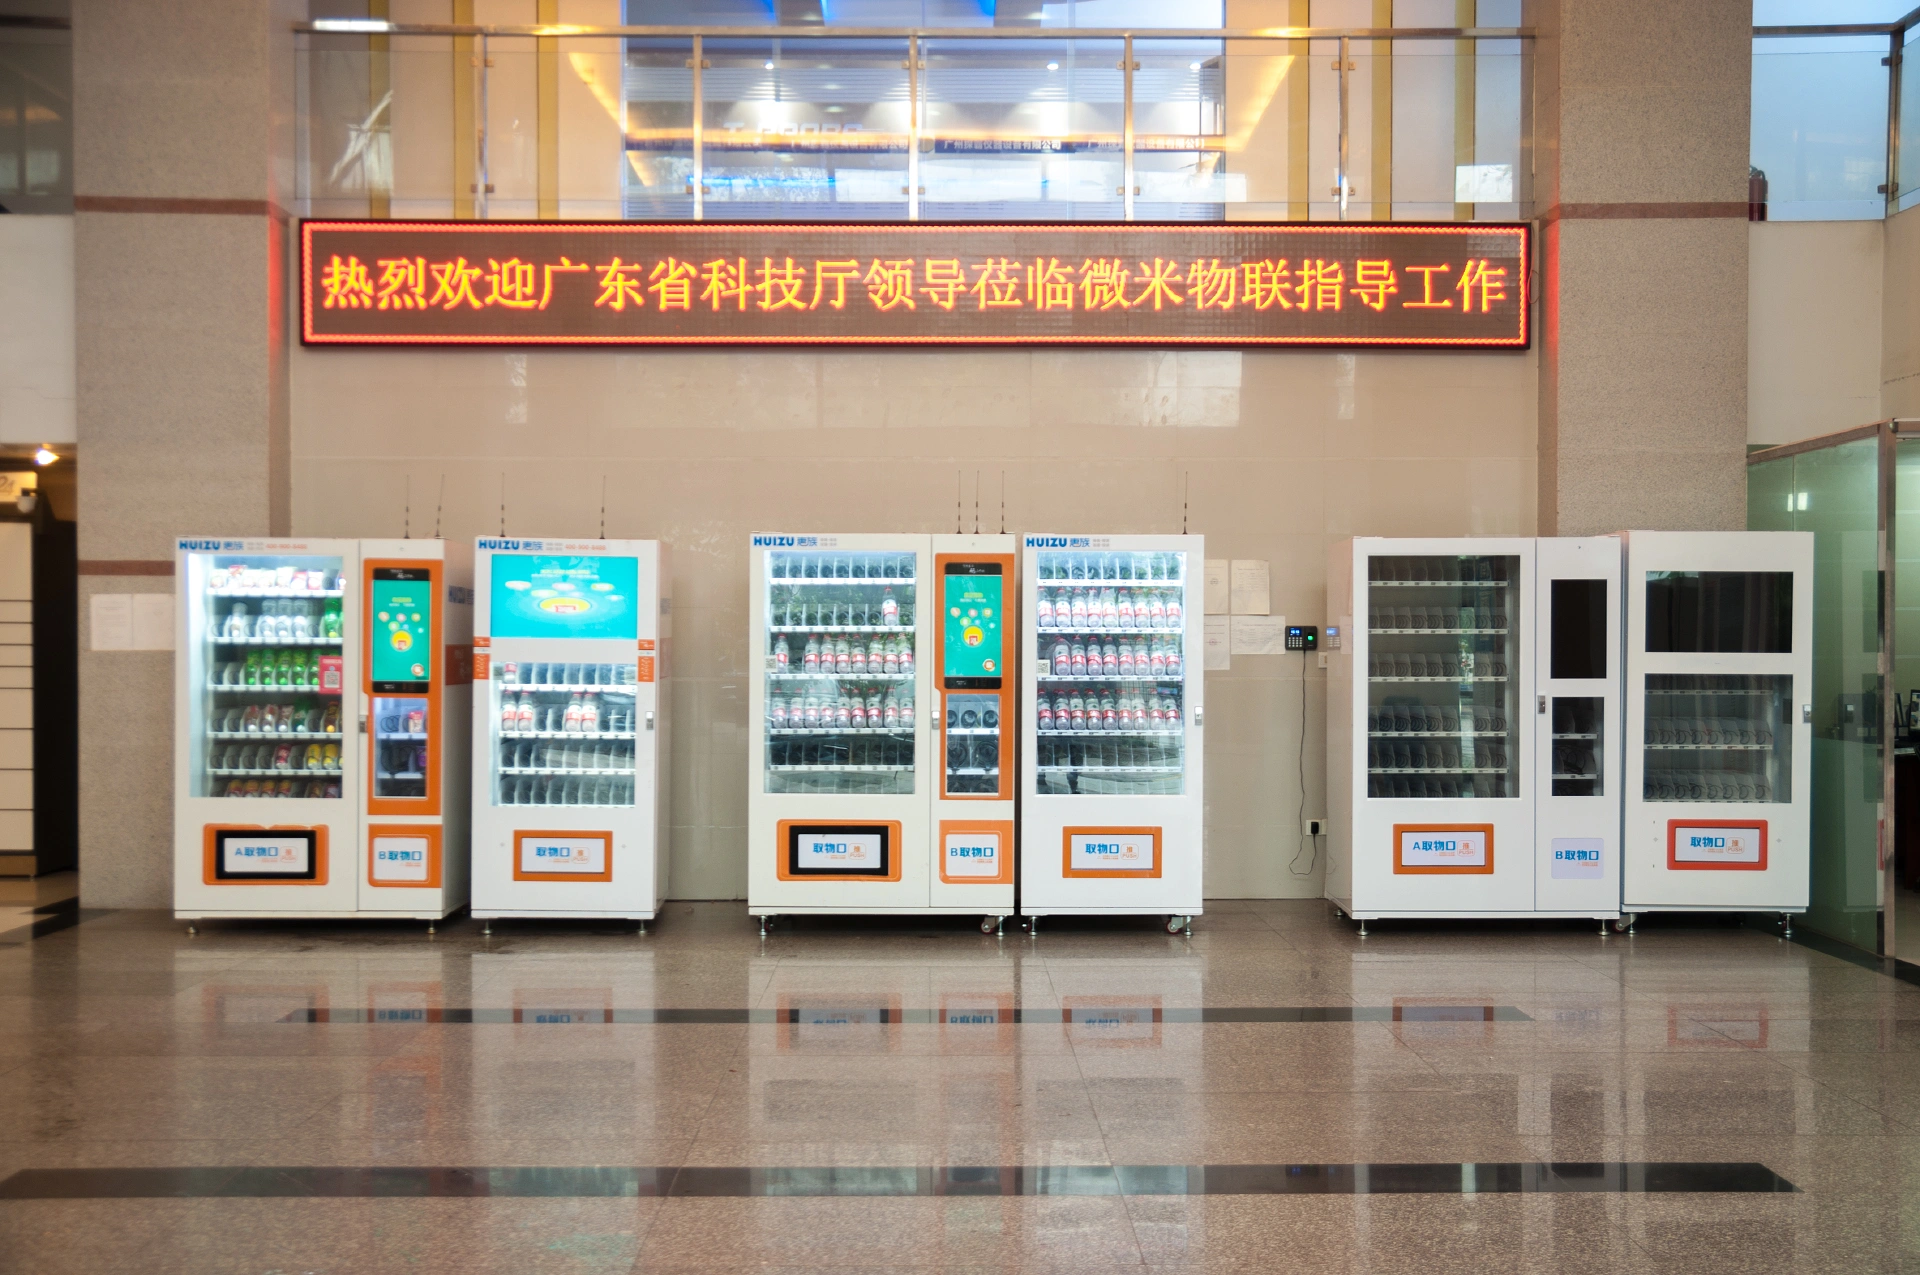 shoes touch screen vending machine